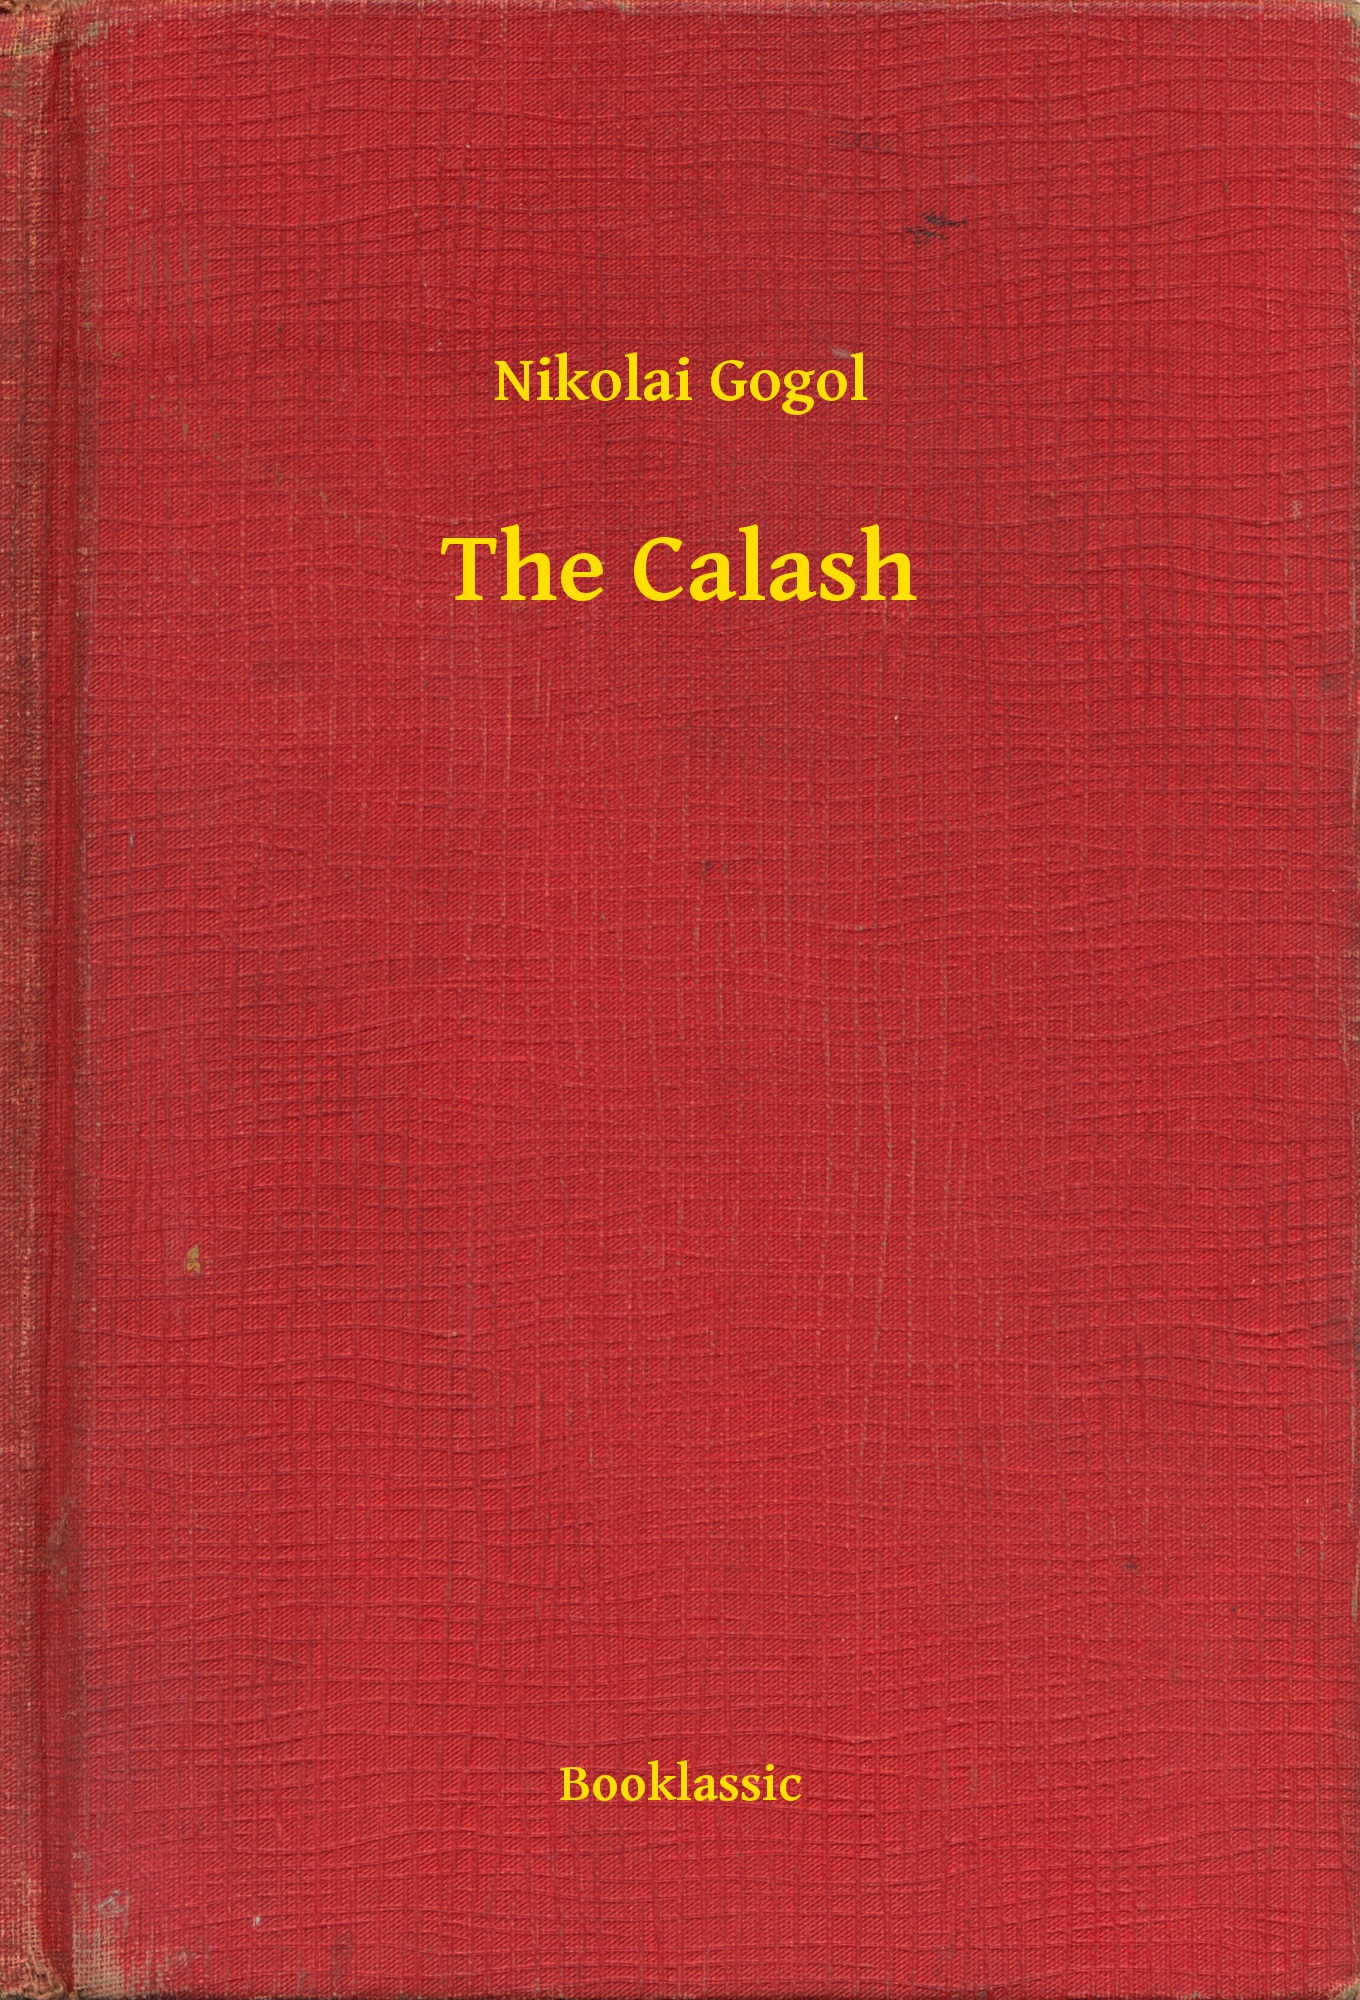 The Calash